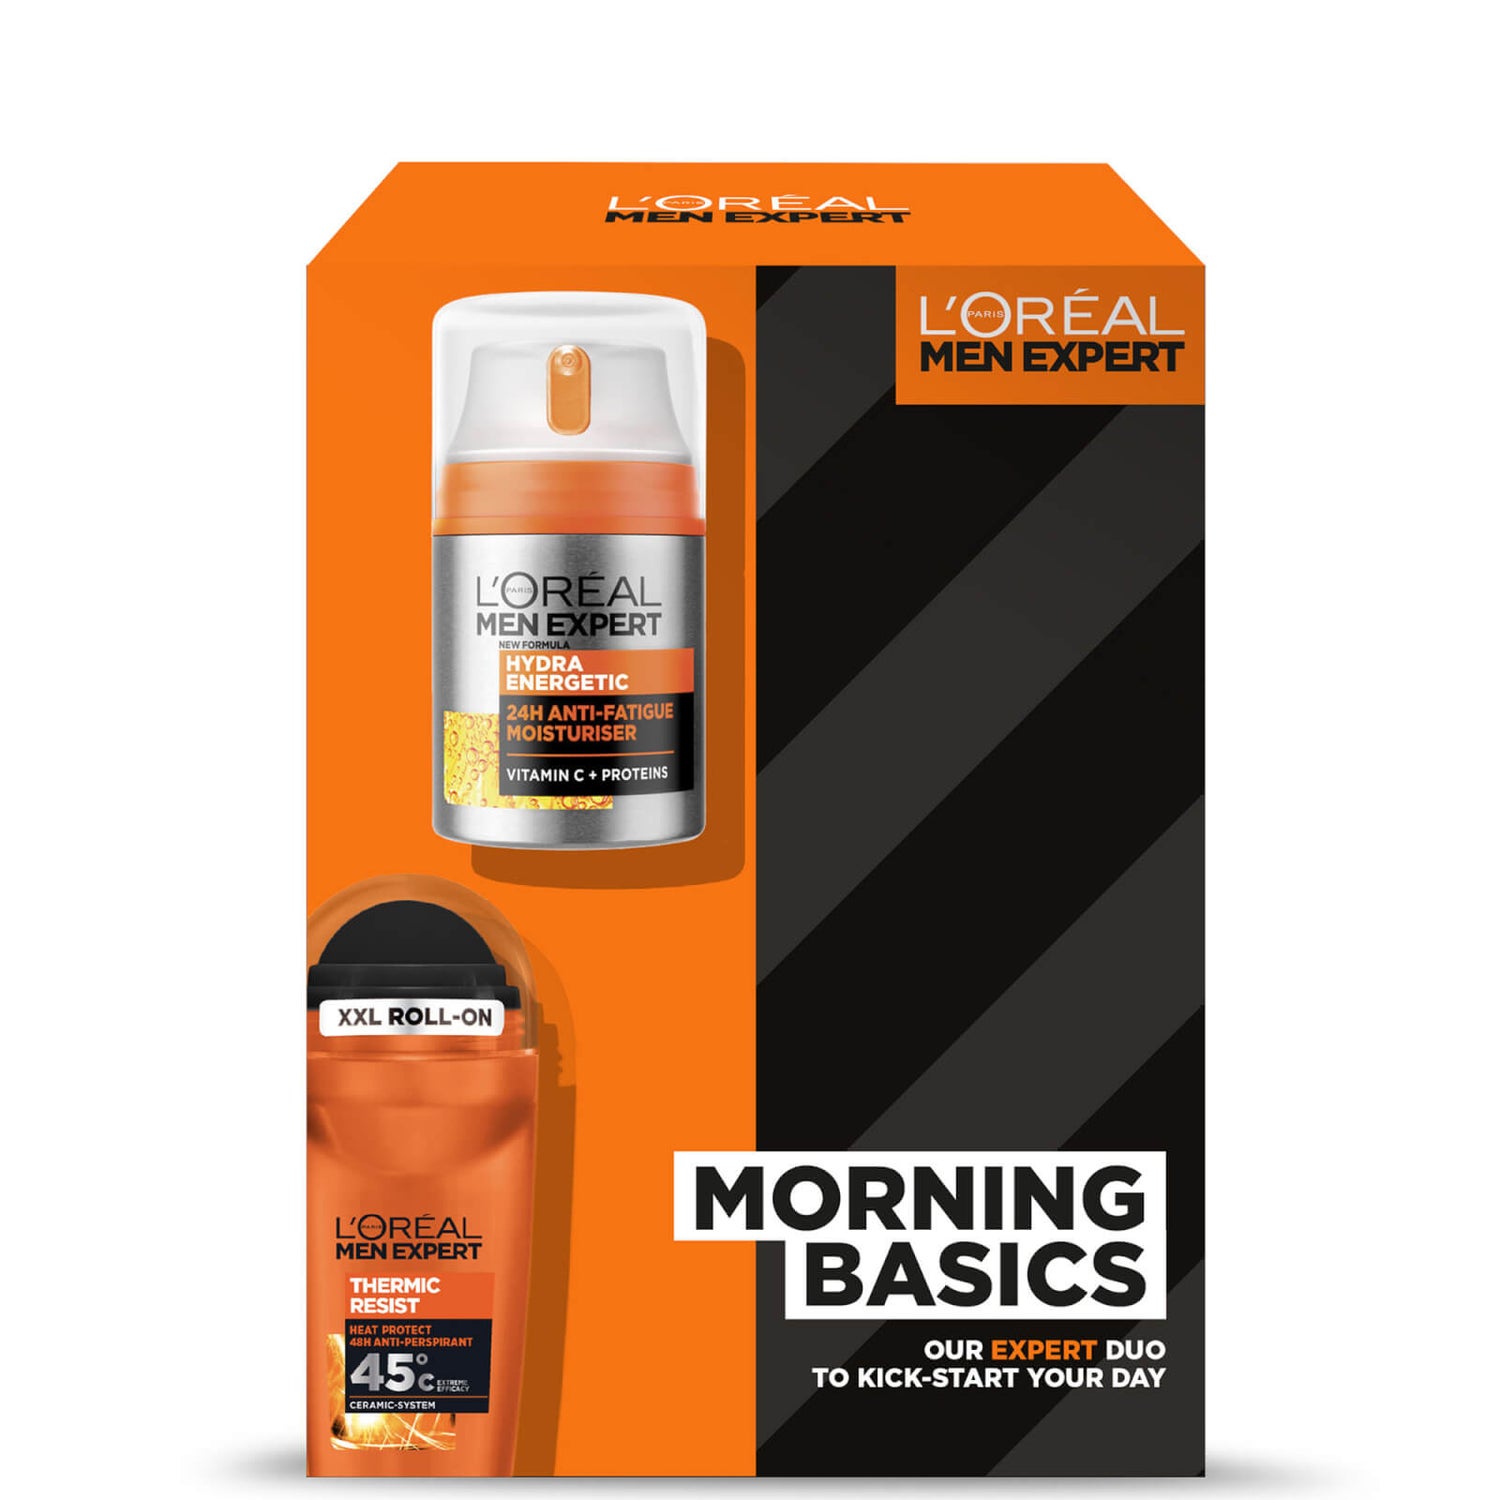 L'Oreal Paris Men Expert Morning Basics Gift Set for Him